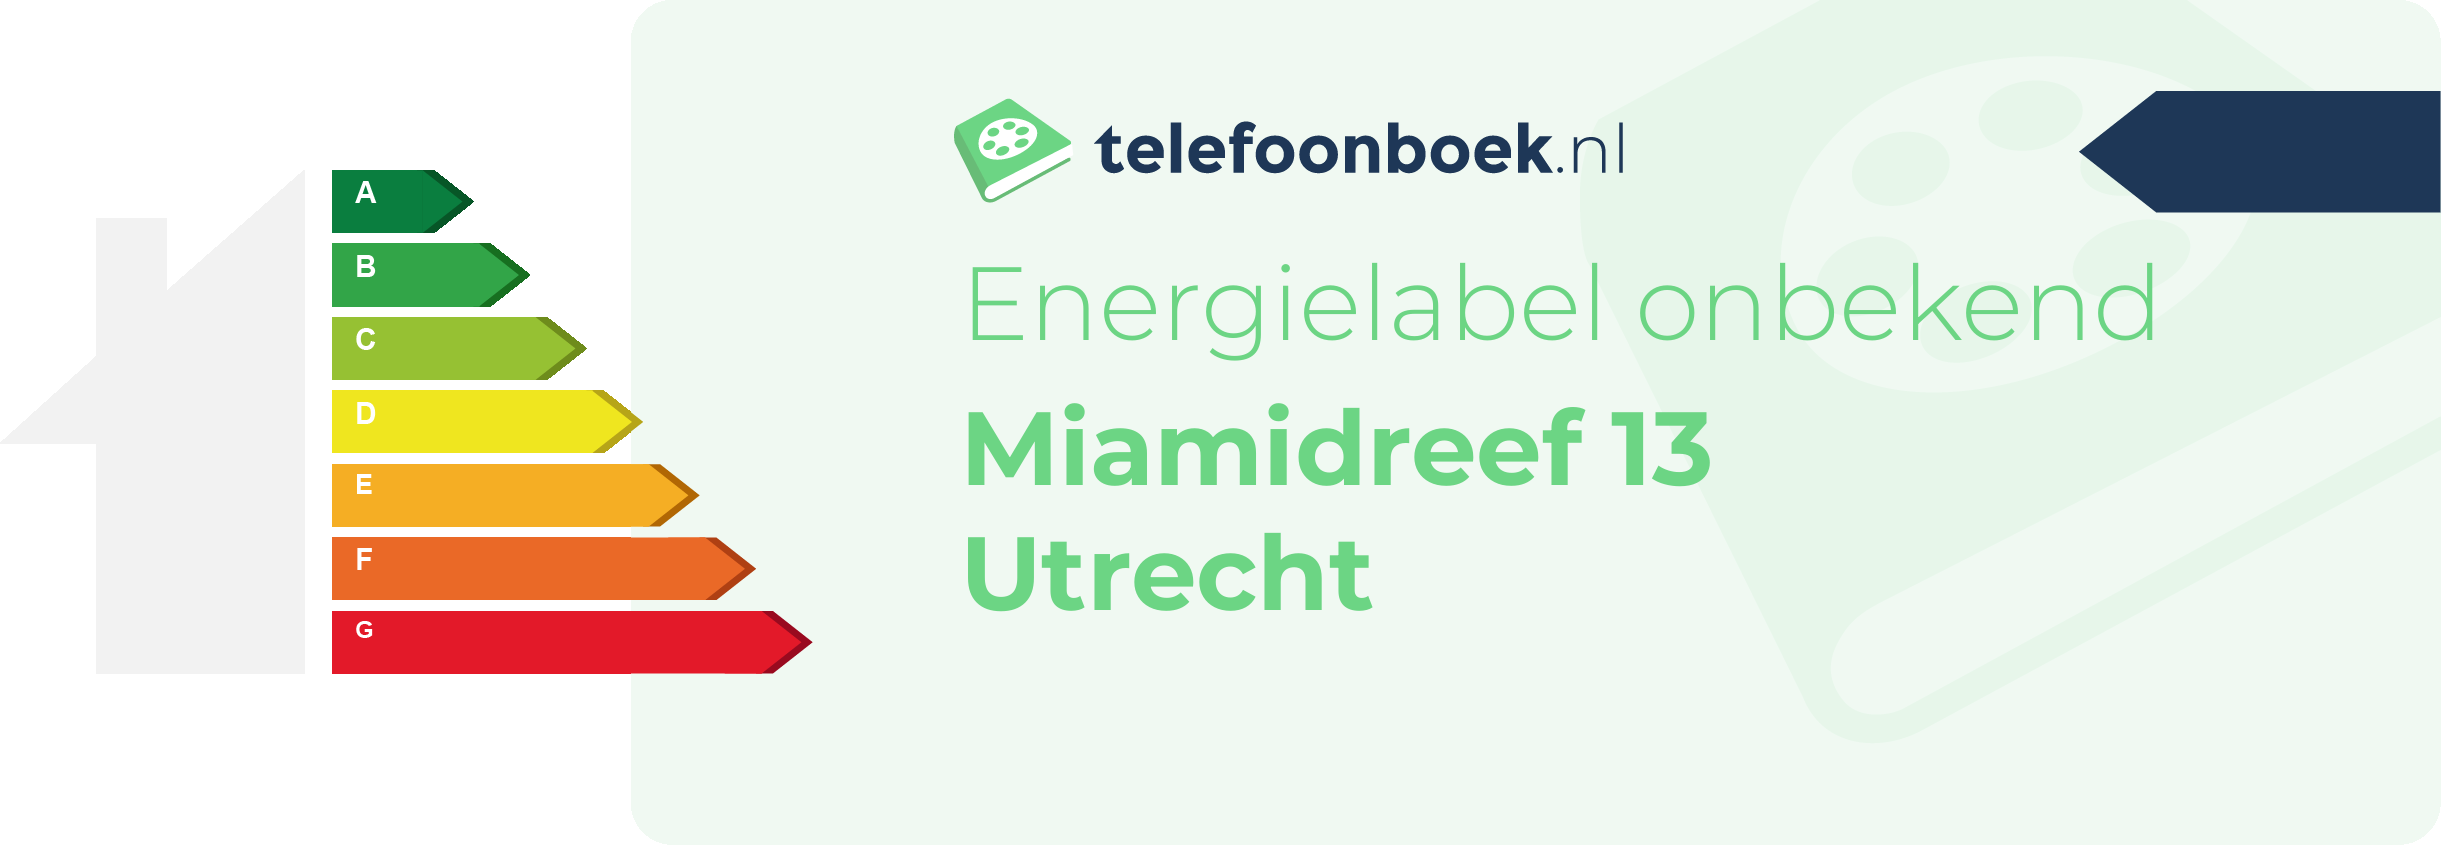 Energielabel Miamidreef 13 Utrecht